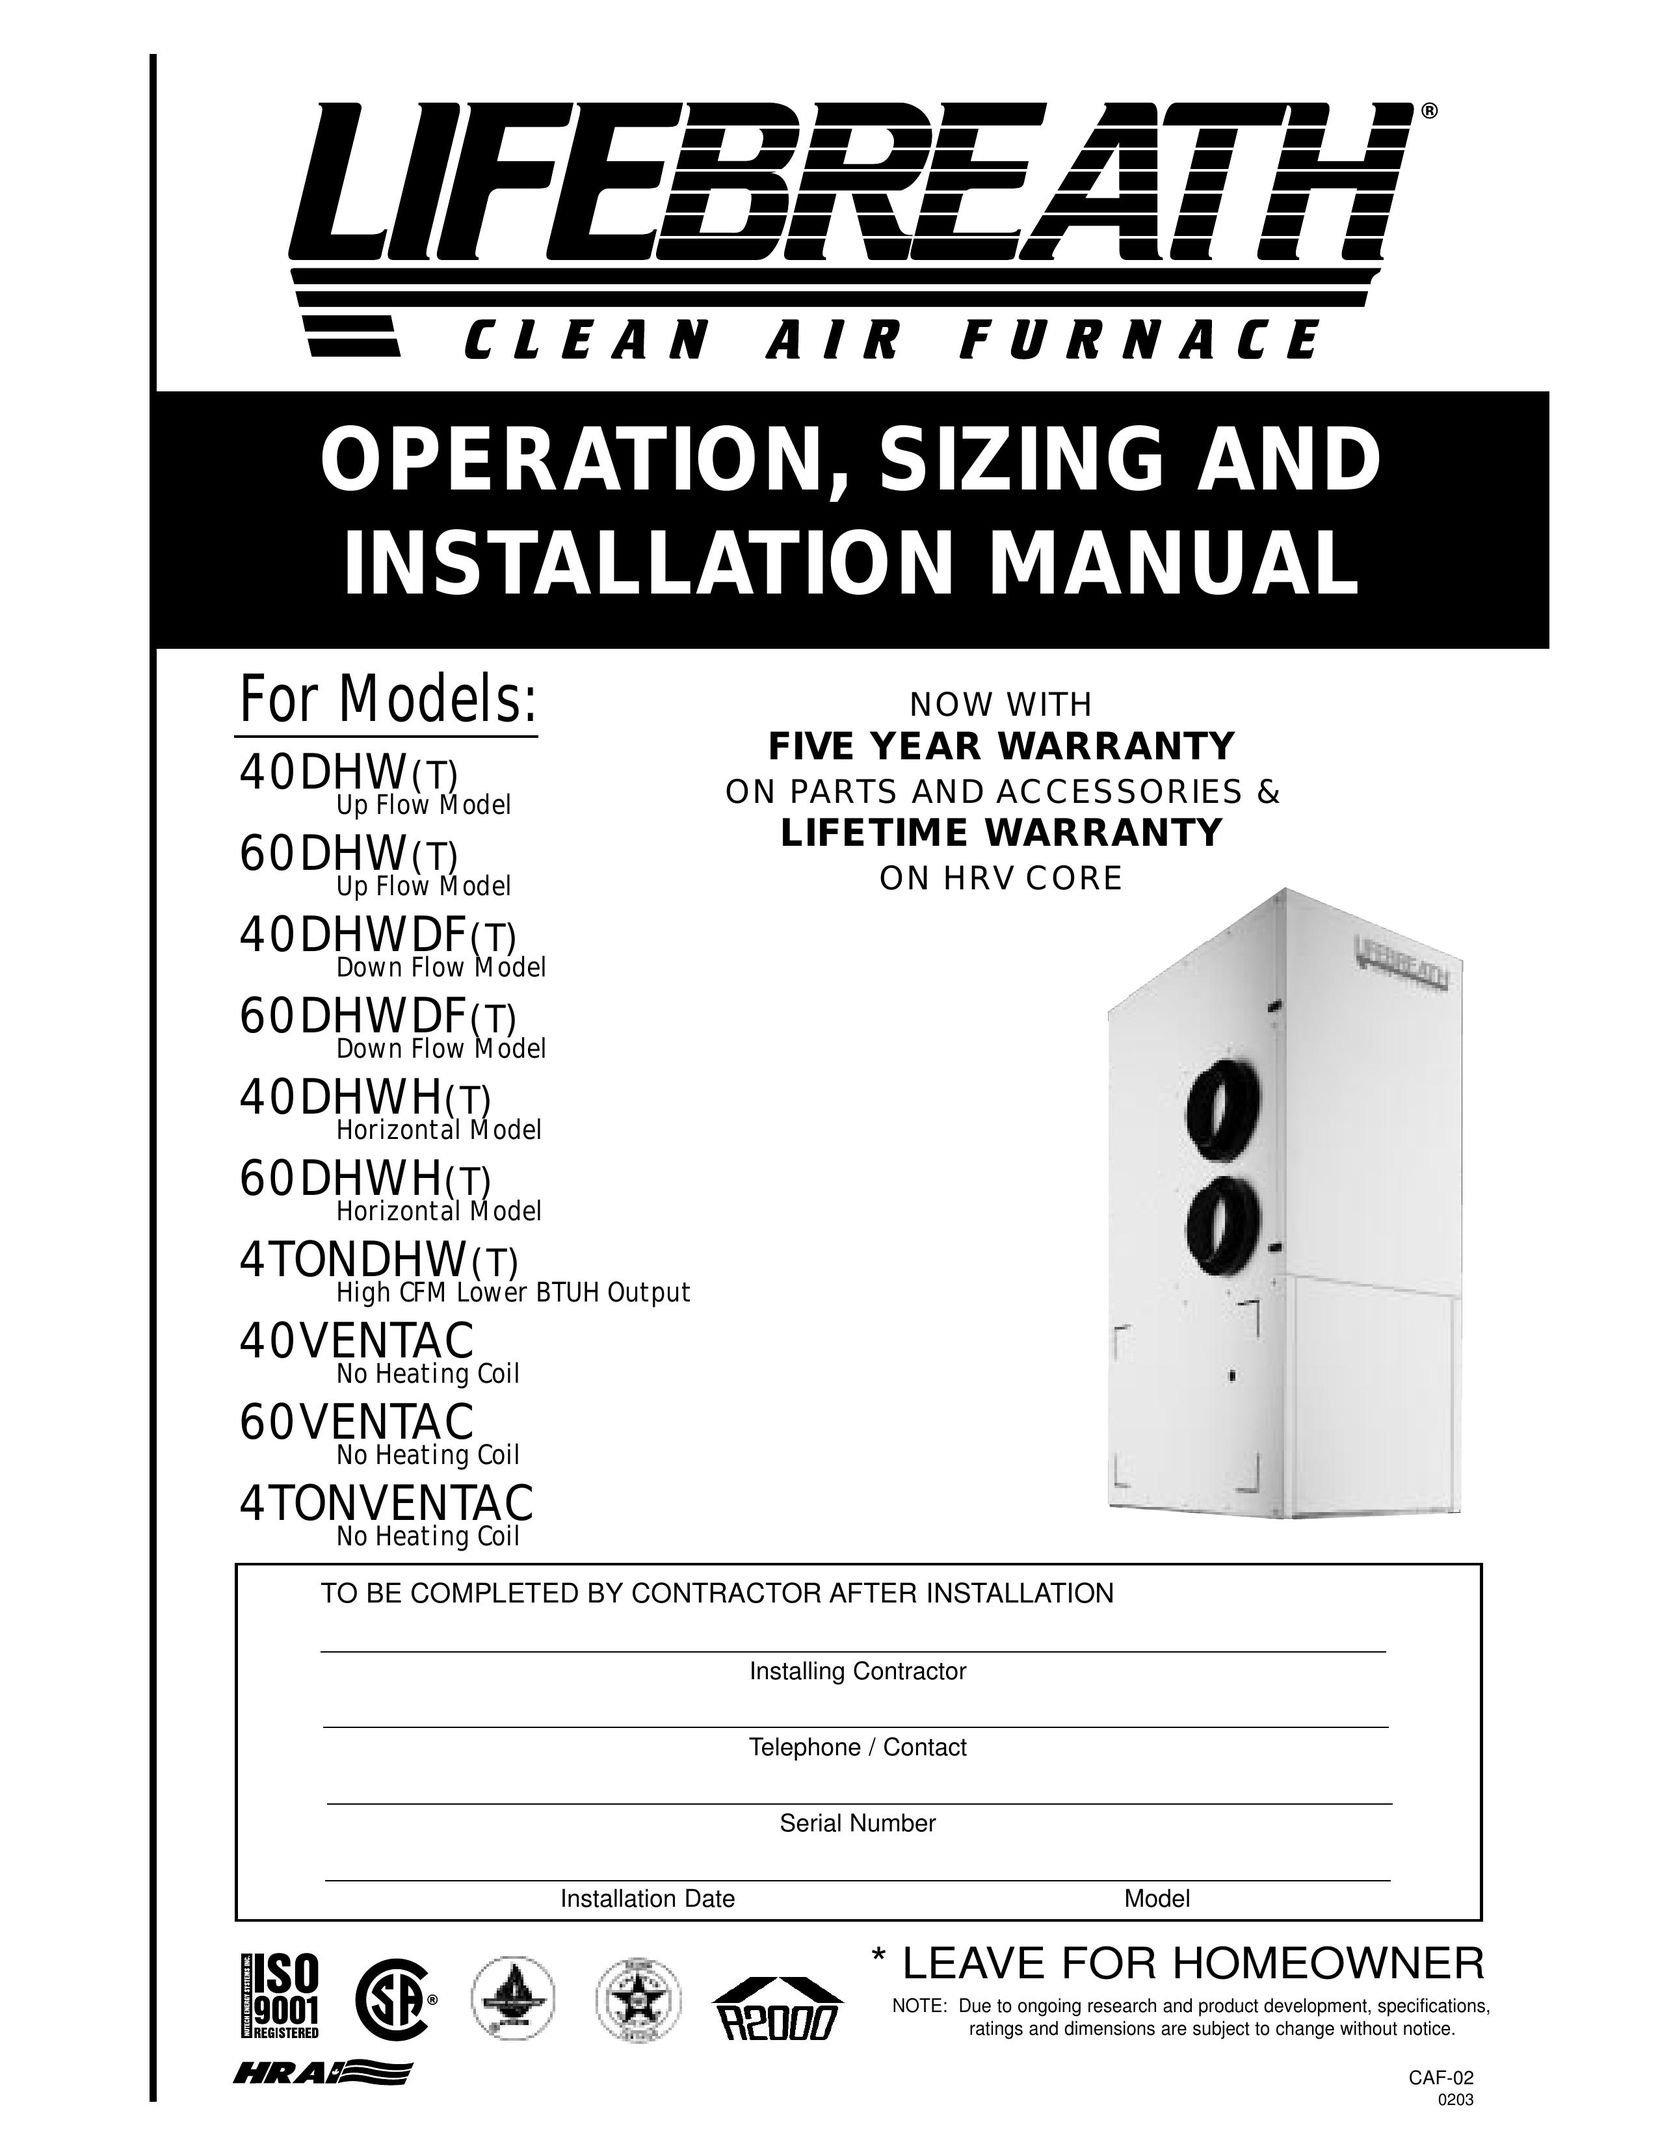 Lifebreath 60DHWDF(T) Thermostat User Manual